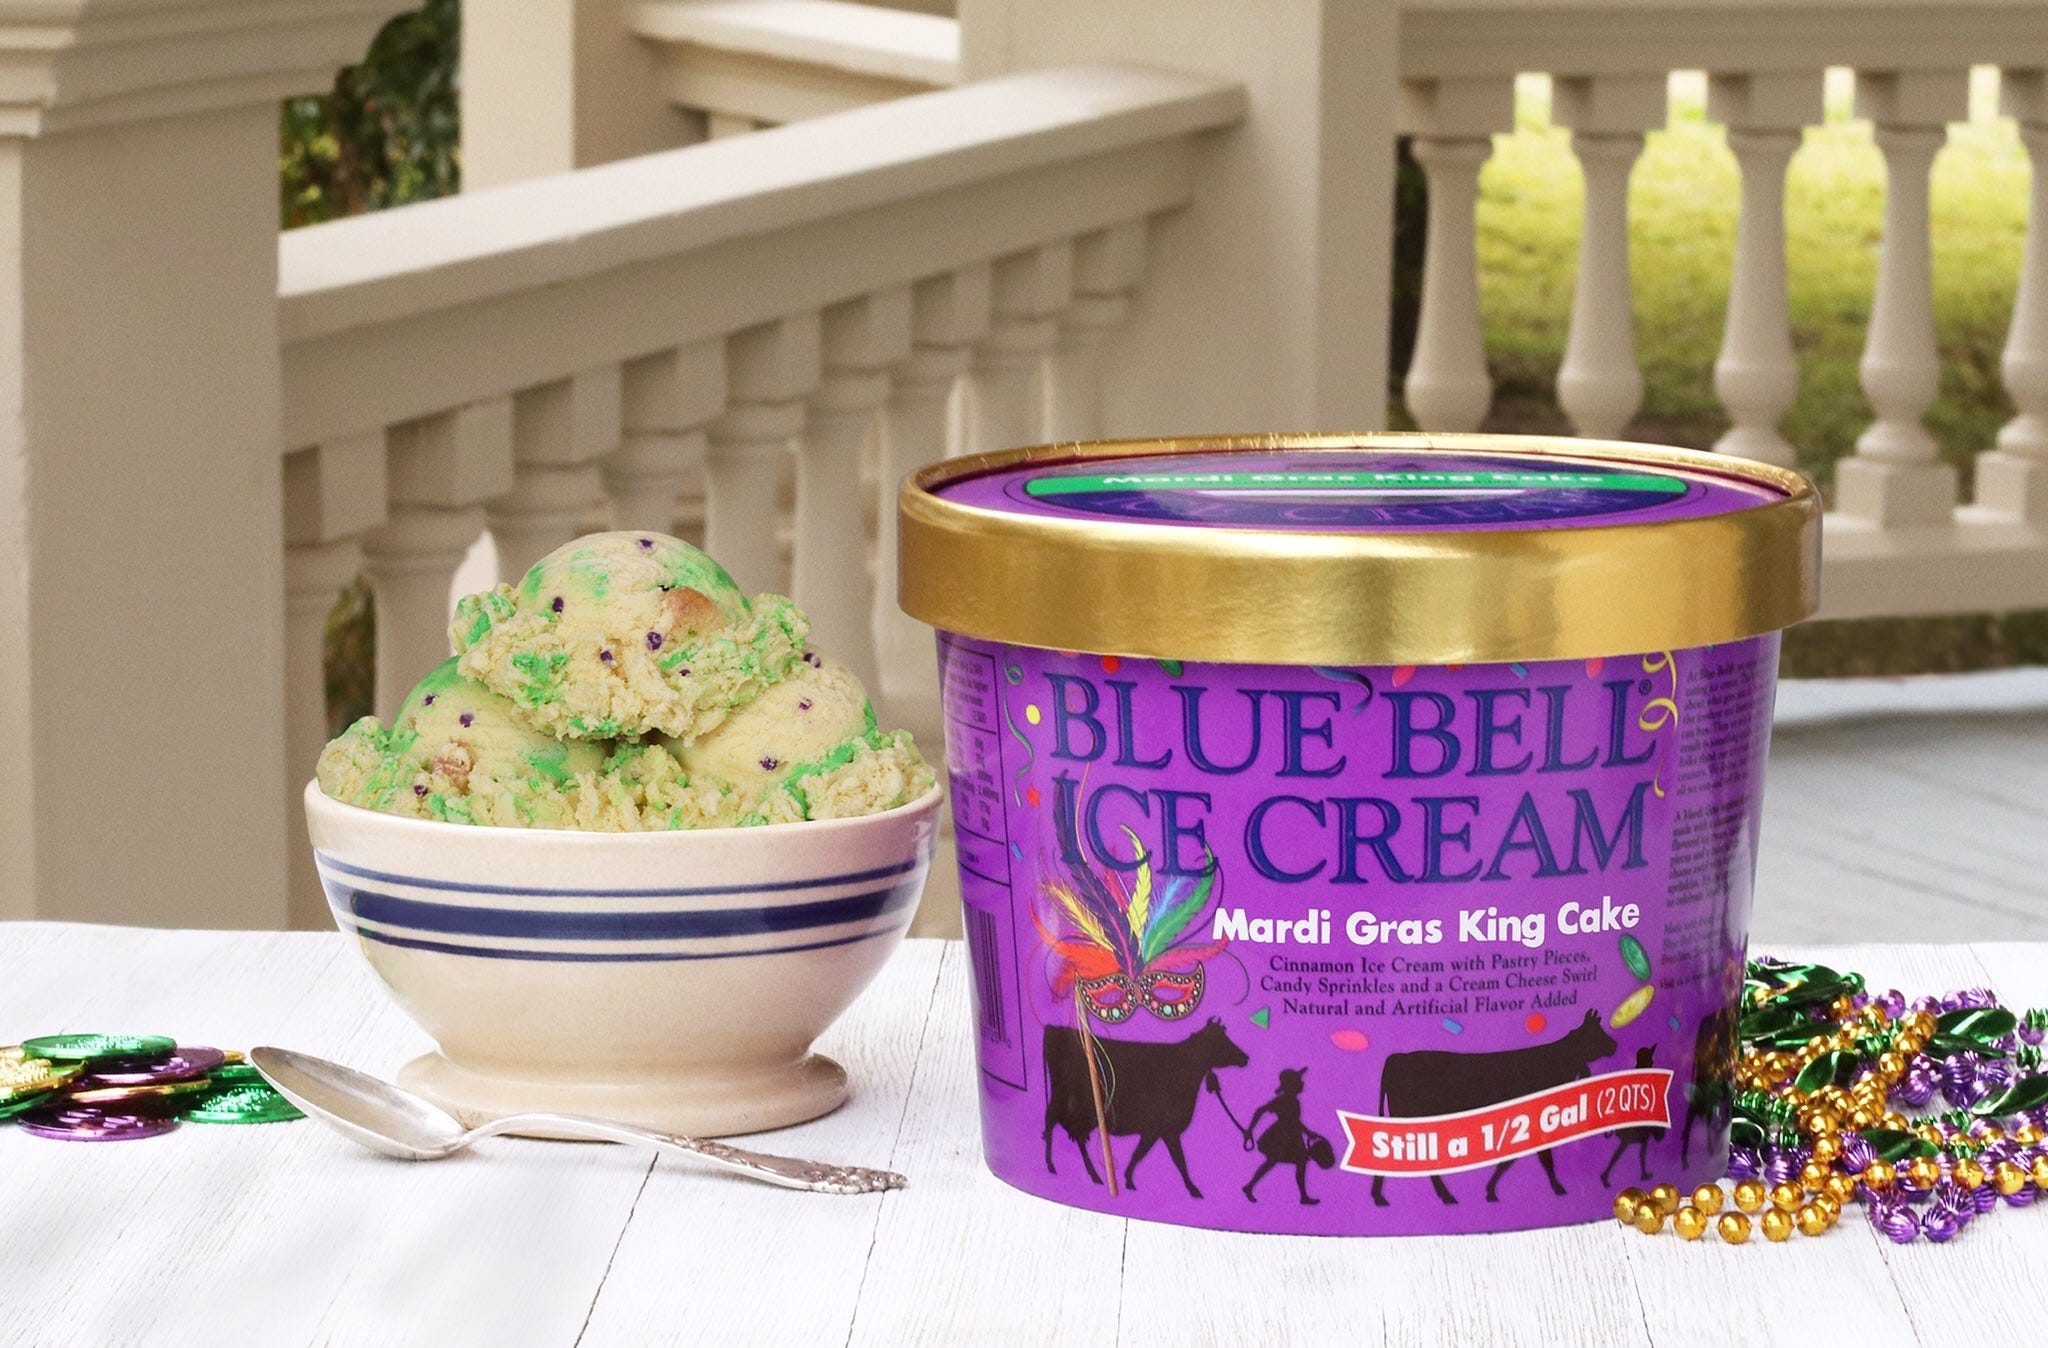 Blue bell mardi gras . ice cream review